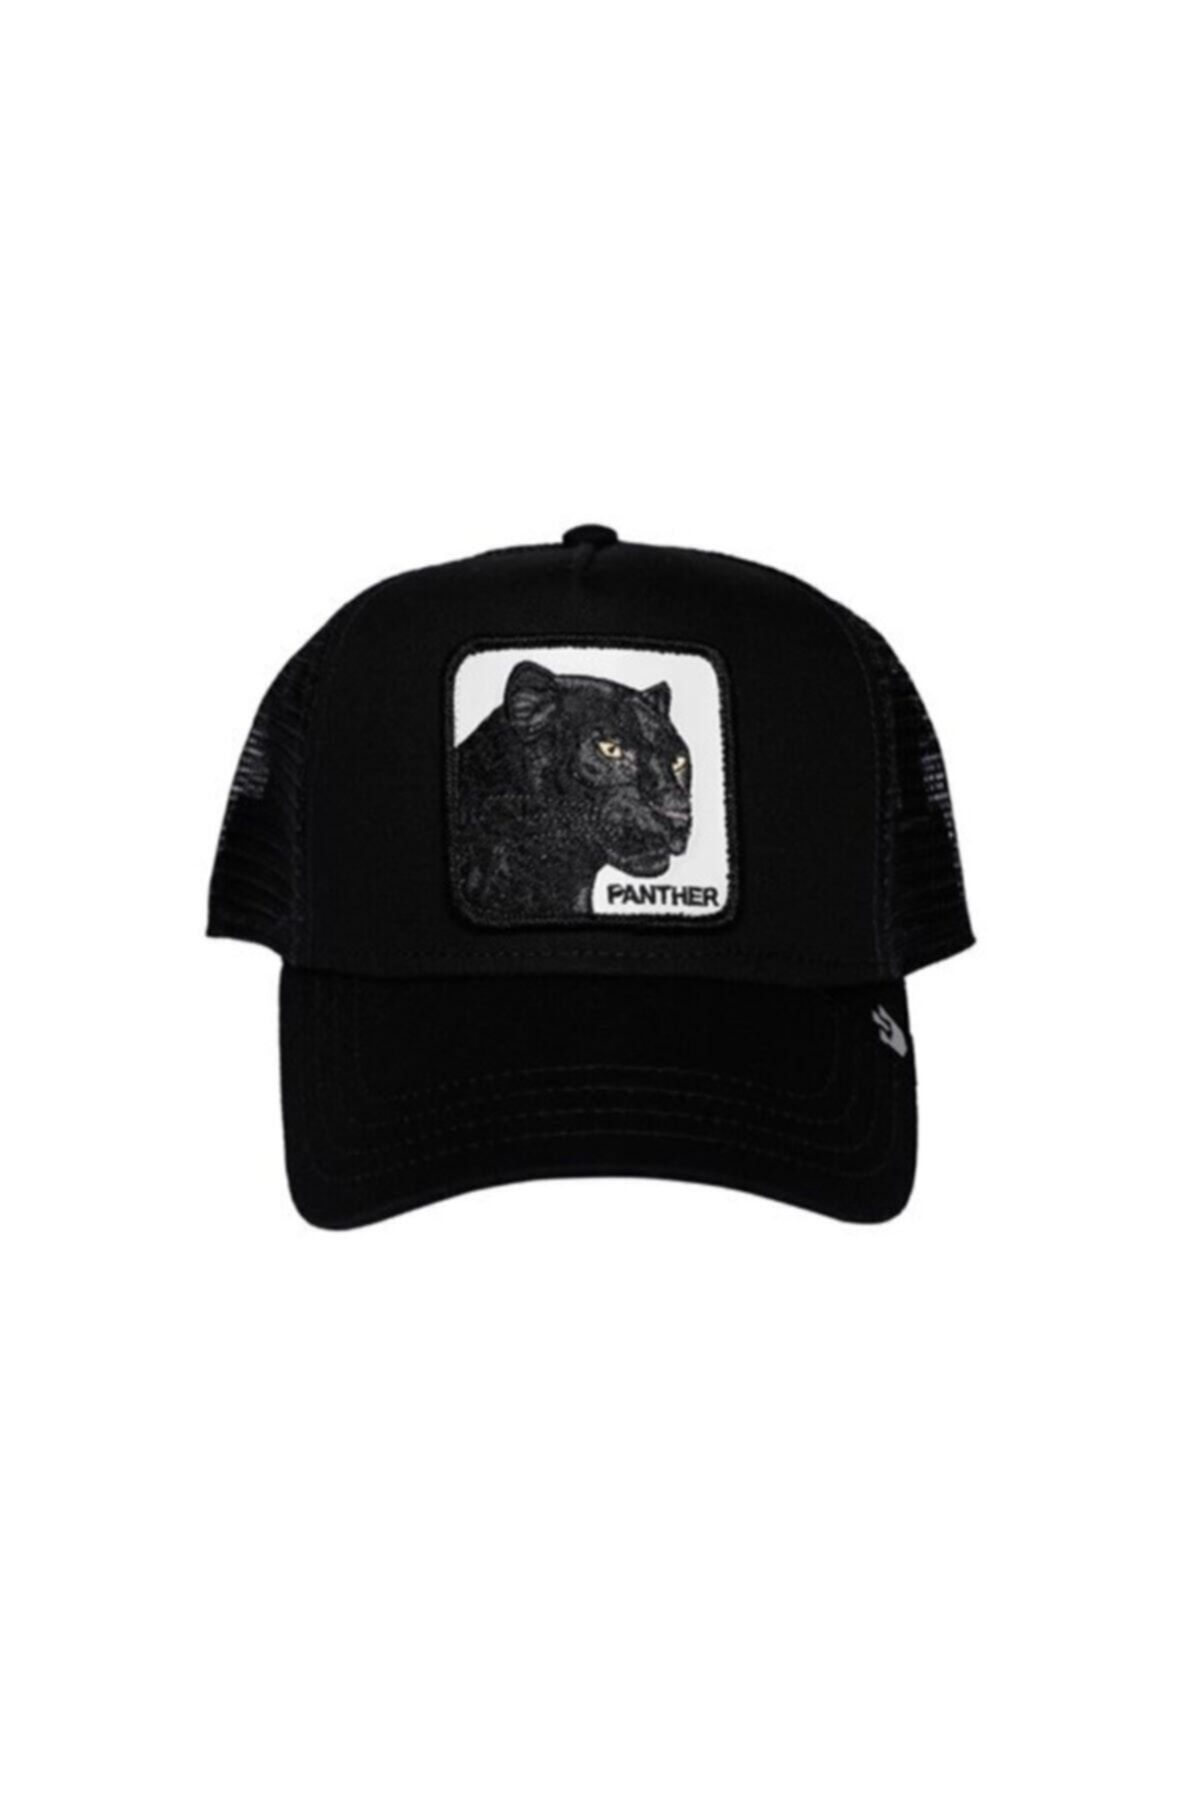 Goorin Bros Unisex Siyah Panther Şapka